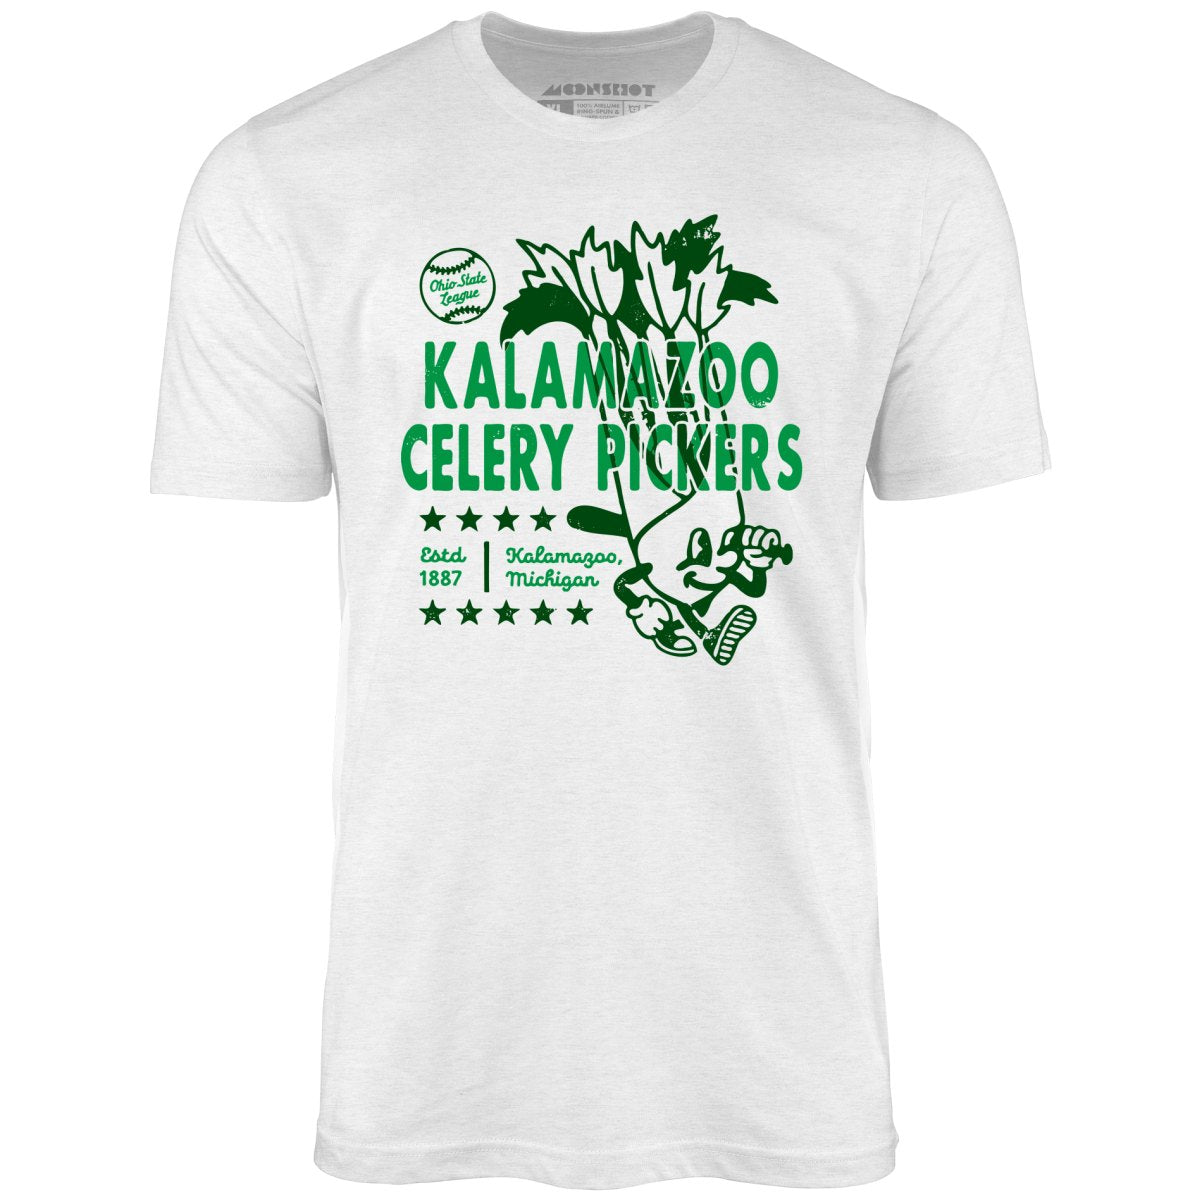 Kalamazoo Celery Pickers - Michigan - Vintage Defunct Baseball Teams - Unisex T-Shirt